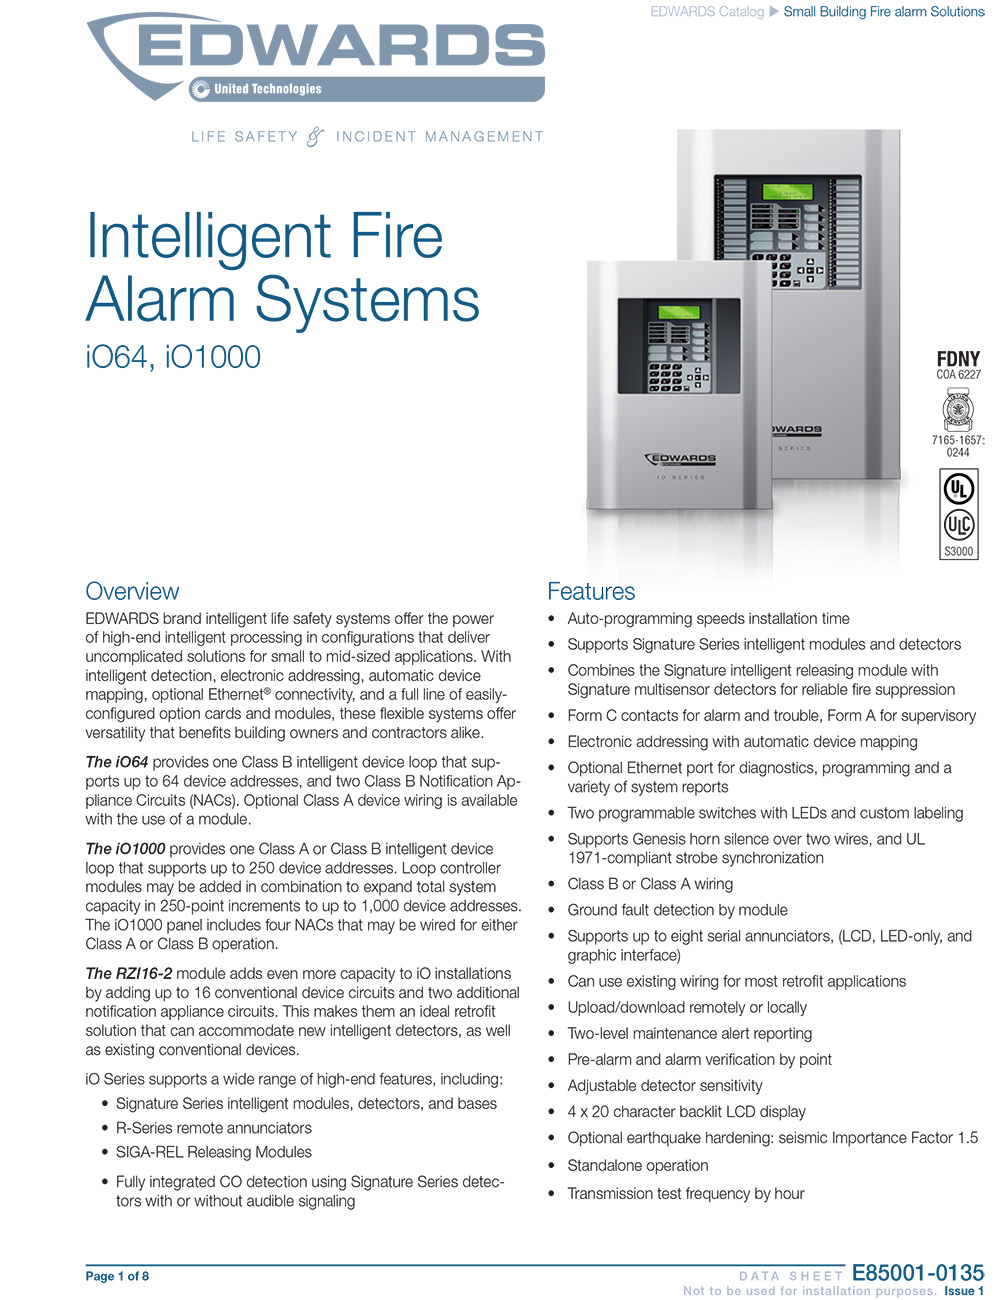 Intelligent Fire Alarm System iO64, iO1000